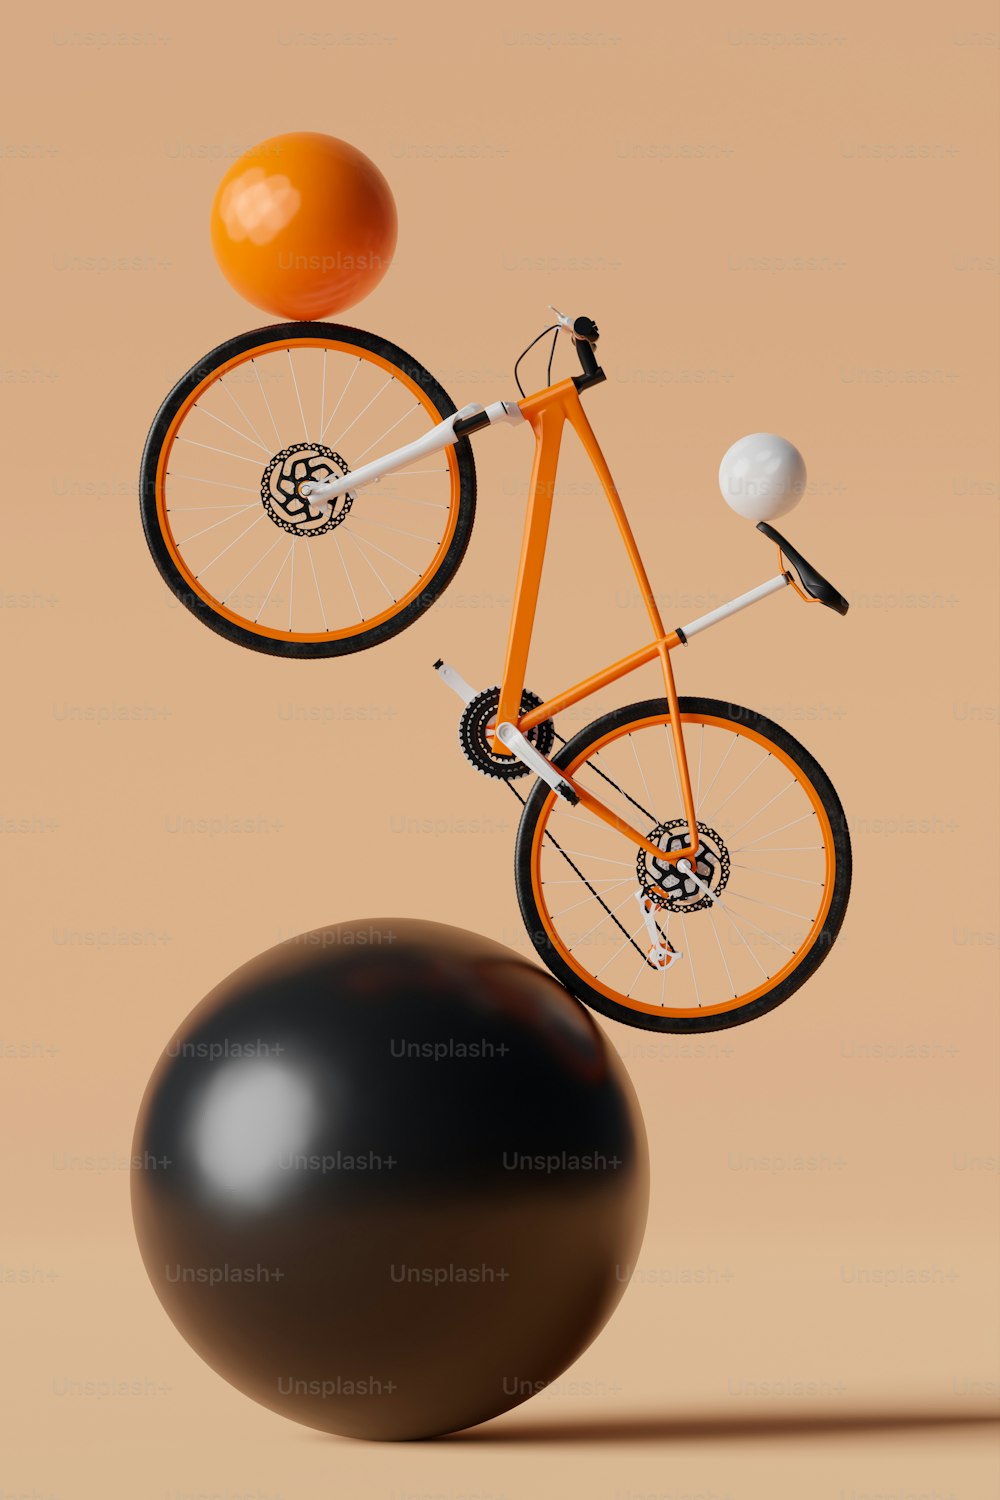 Una bici arancione in equilibrio su una palla nera